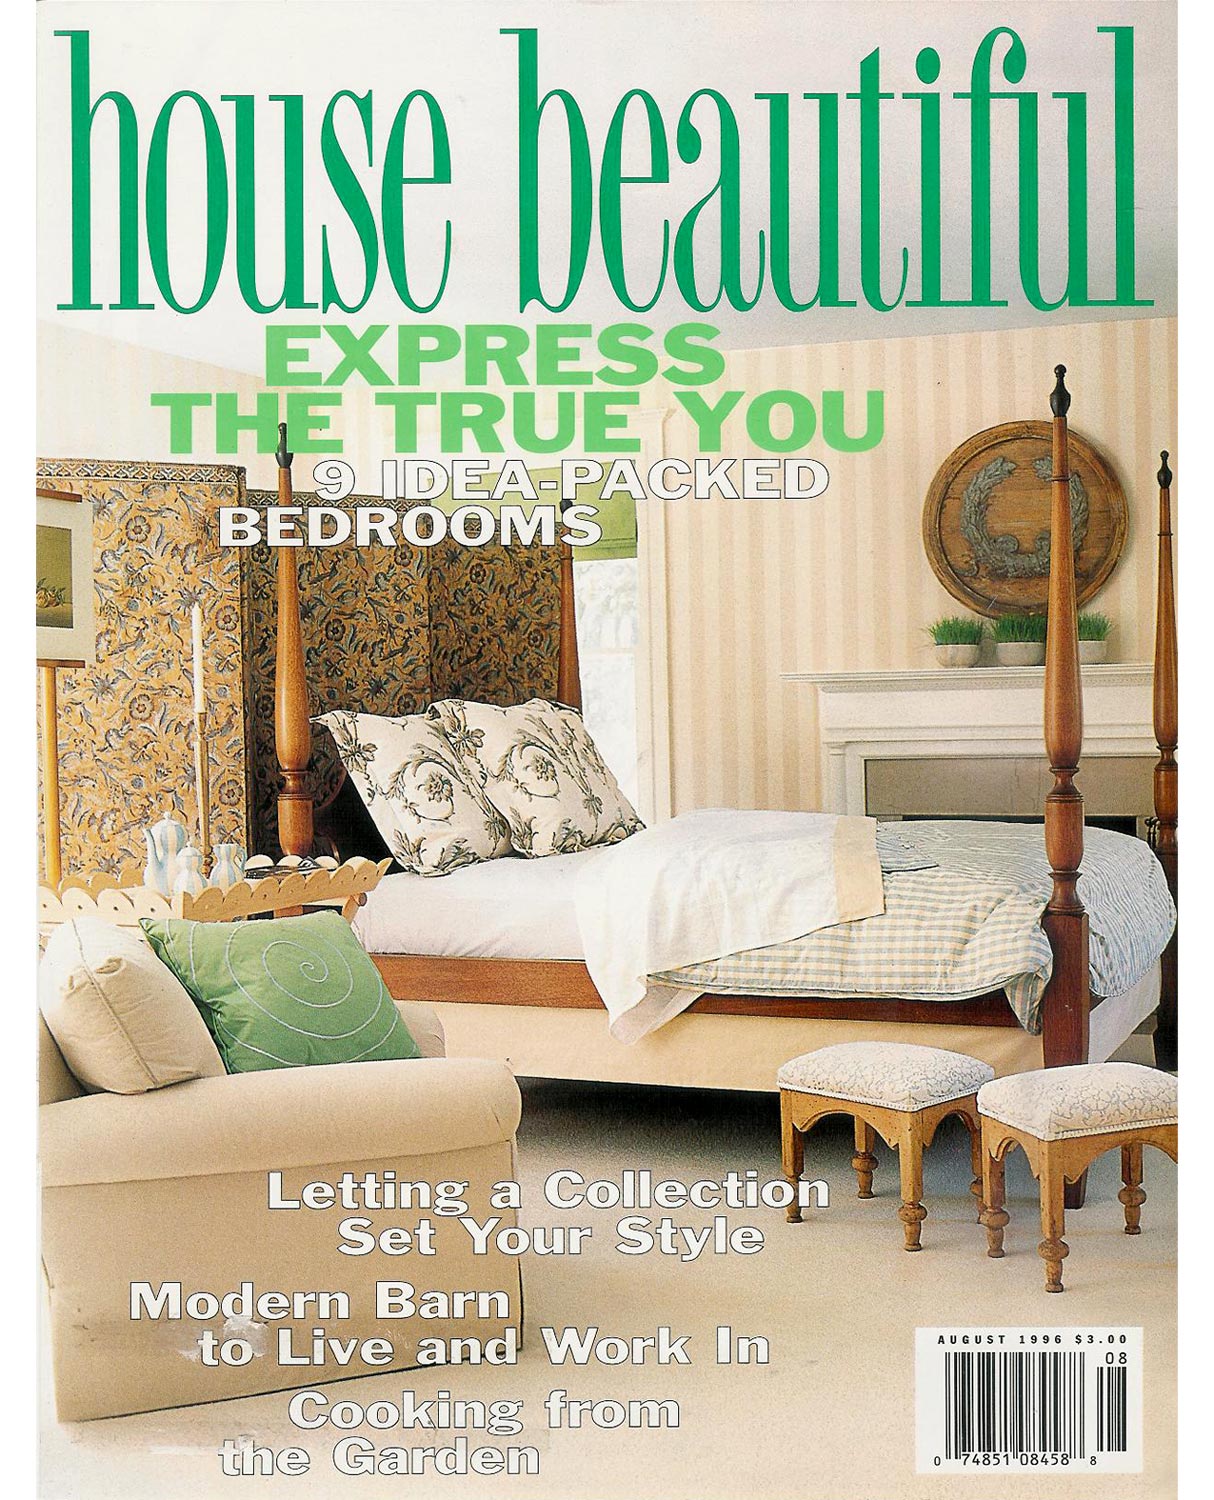 housebeautiful1996-cover_alemanmoore.jpg